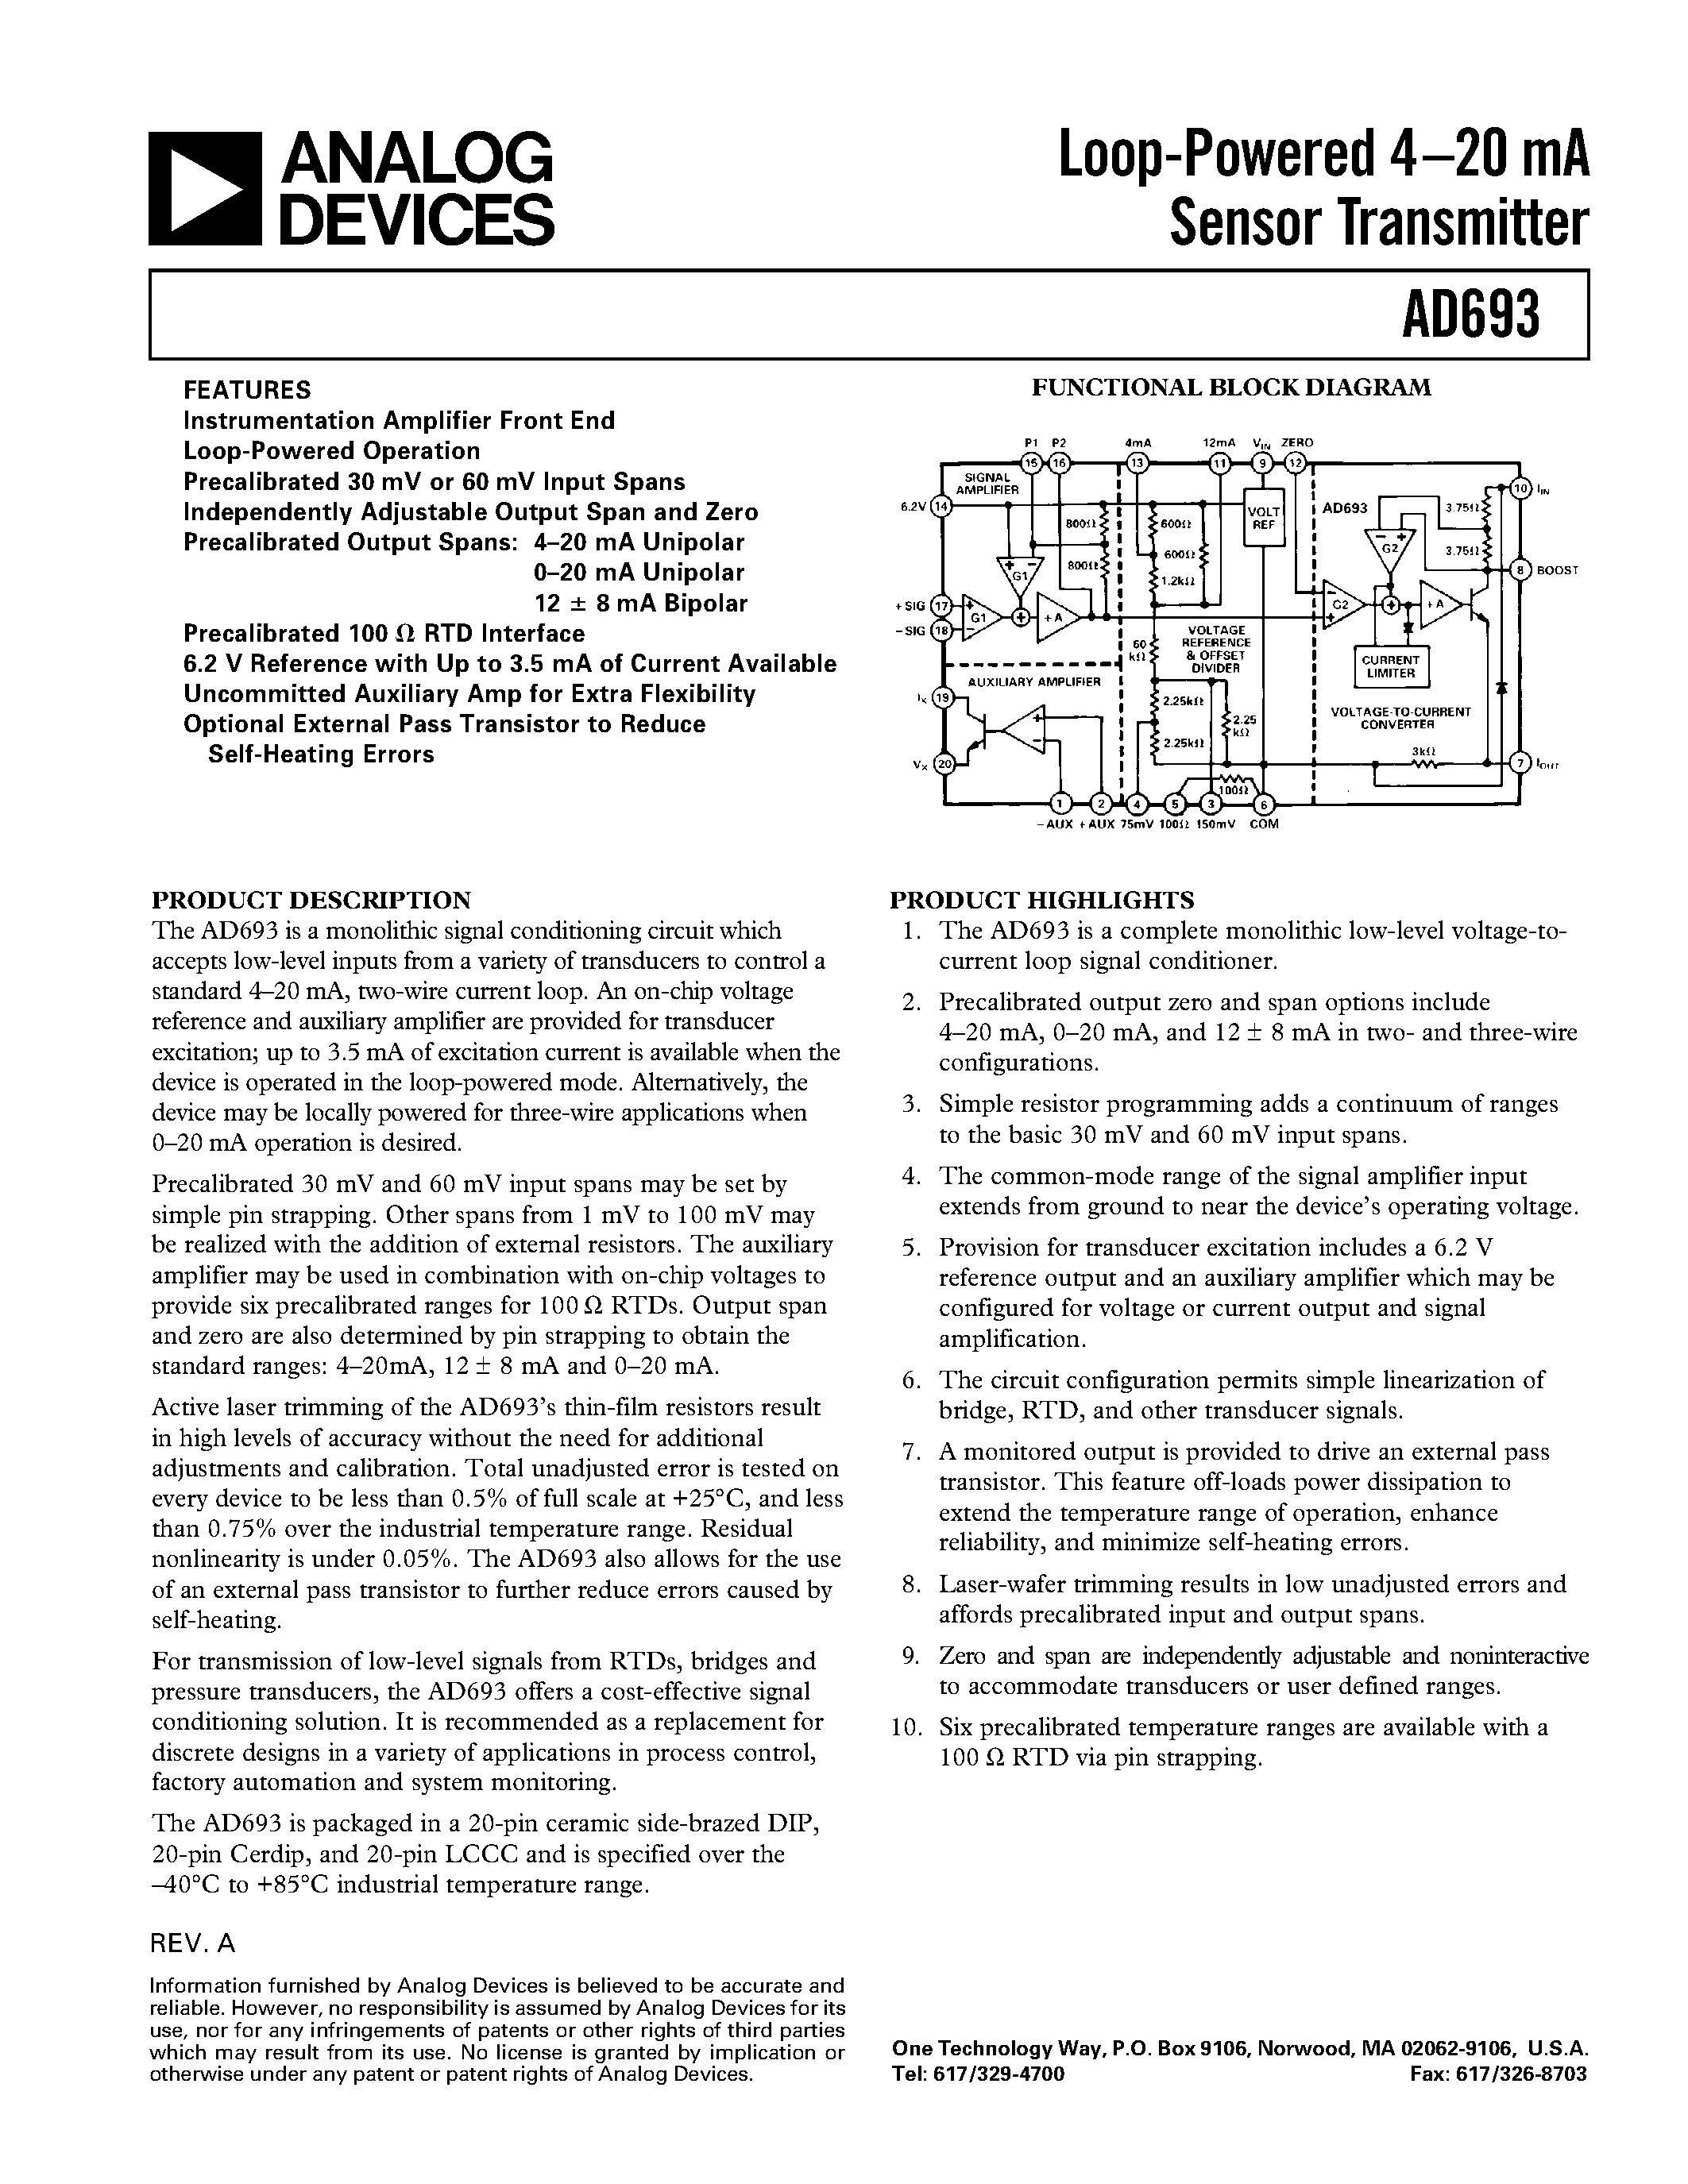 Datasheet AD693 - Loop-Powered 4.20 mA Sensor Transmitter page 1